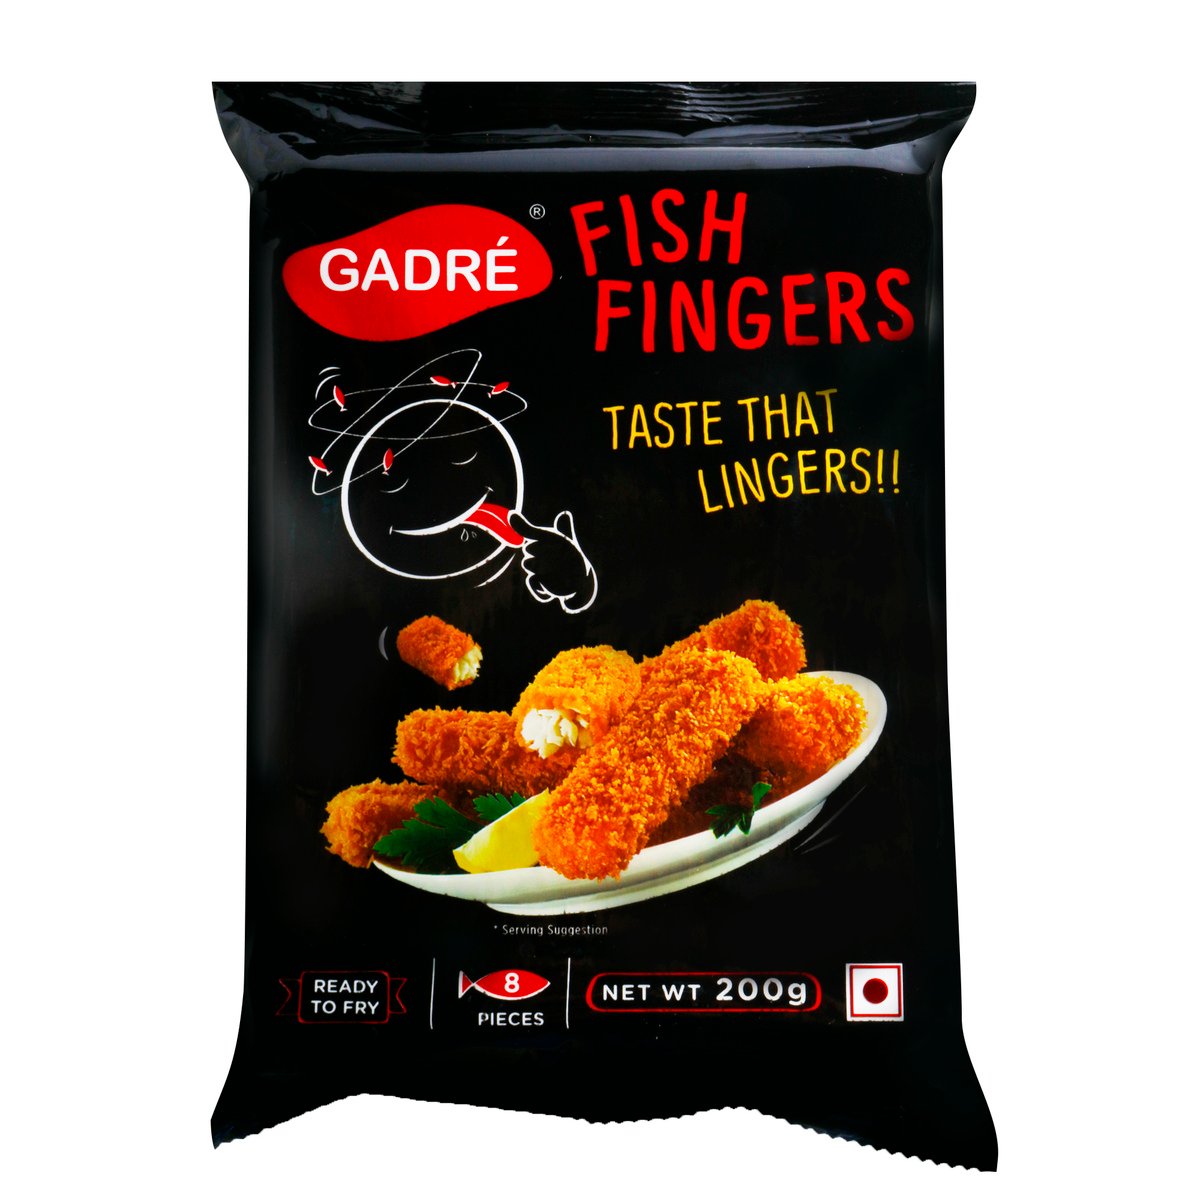 Gadre Fish Fingers 8 pcs 200 g